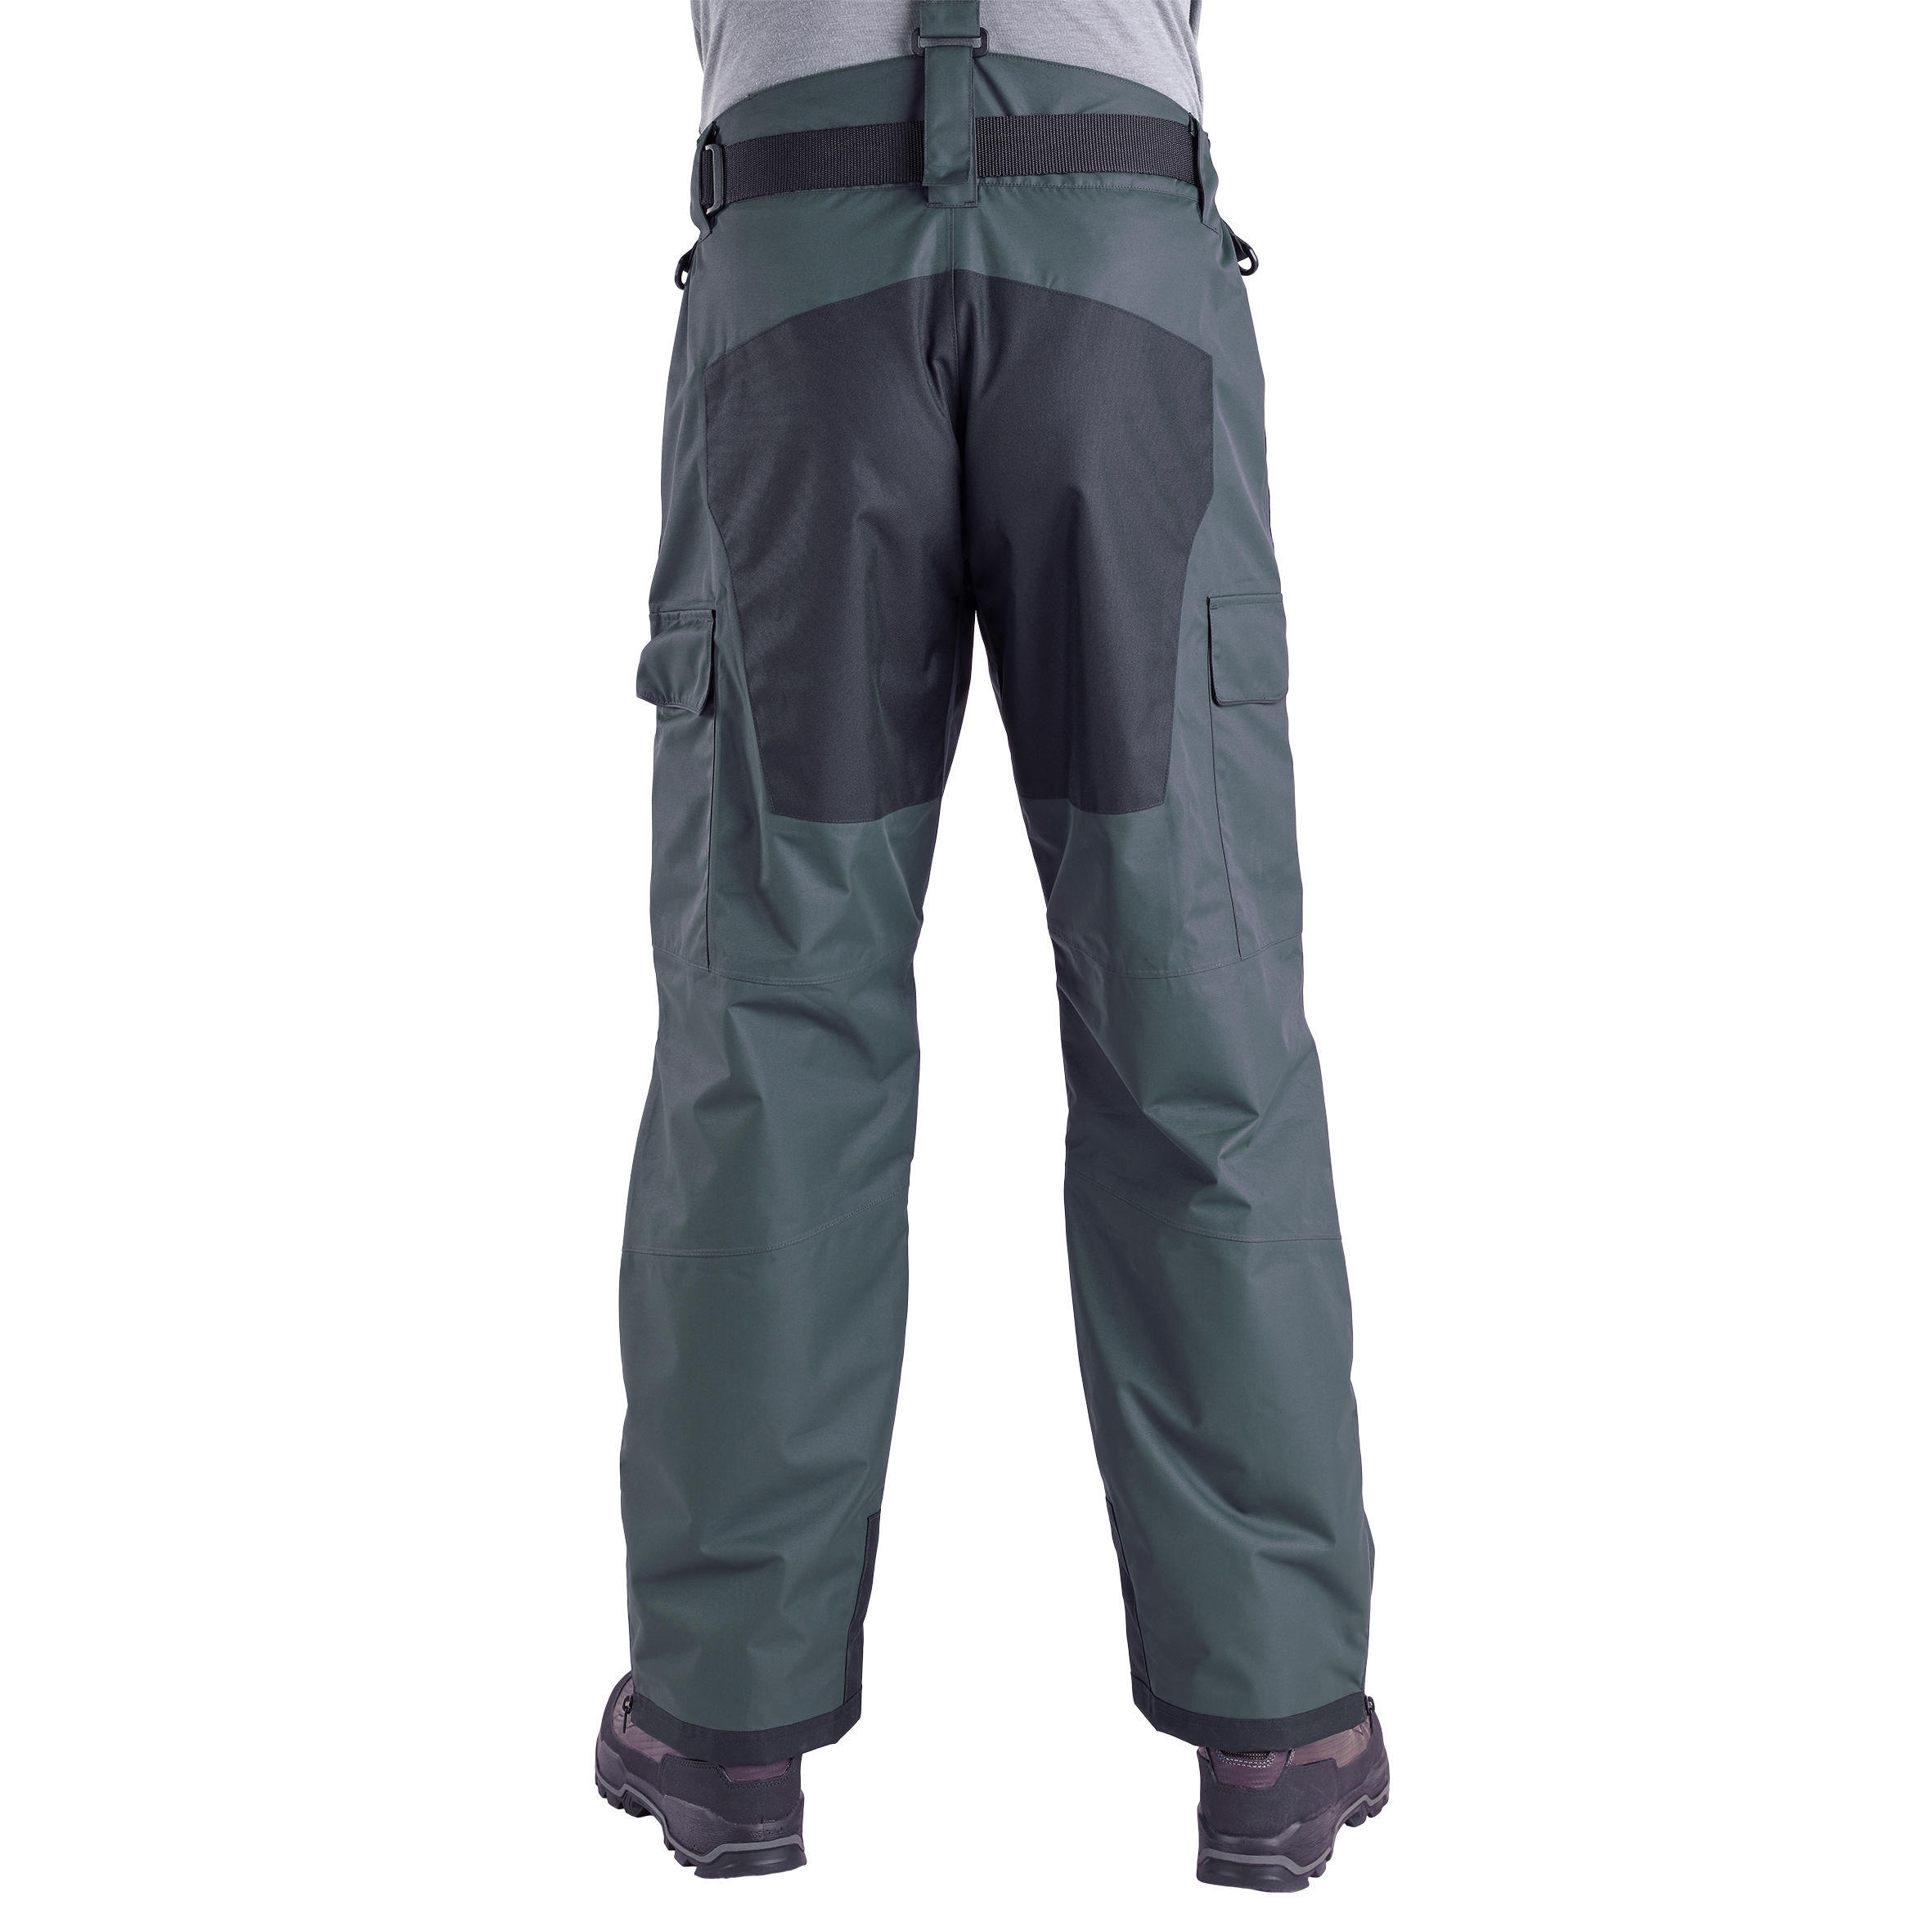 Fishing waterproof trousers 500 grey 4/5